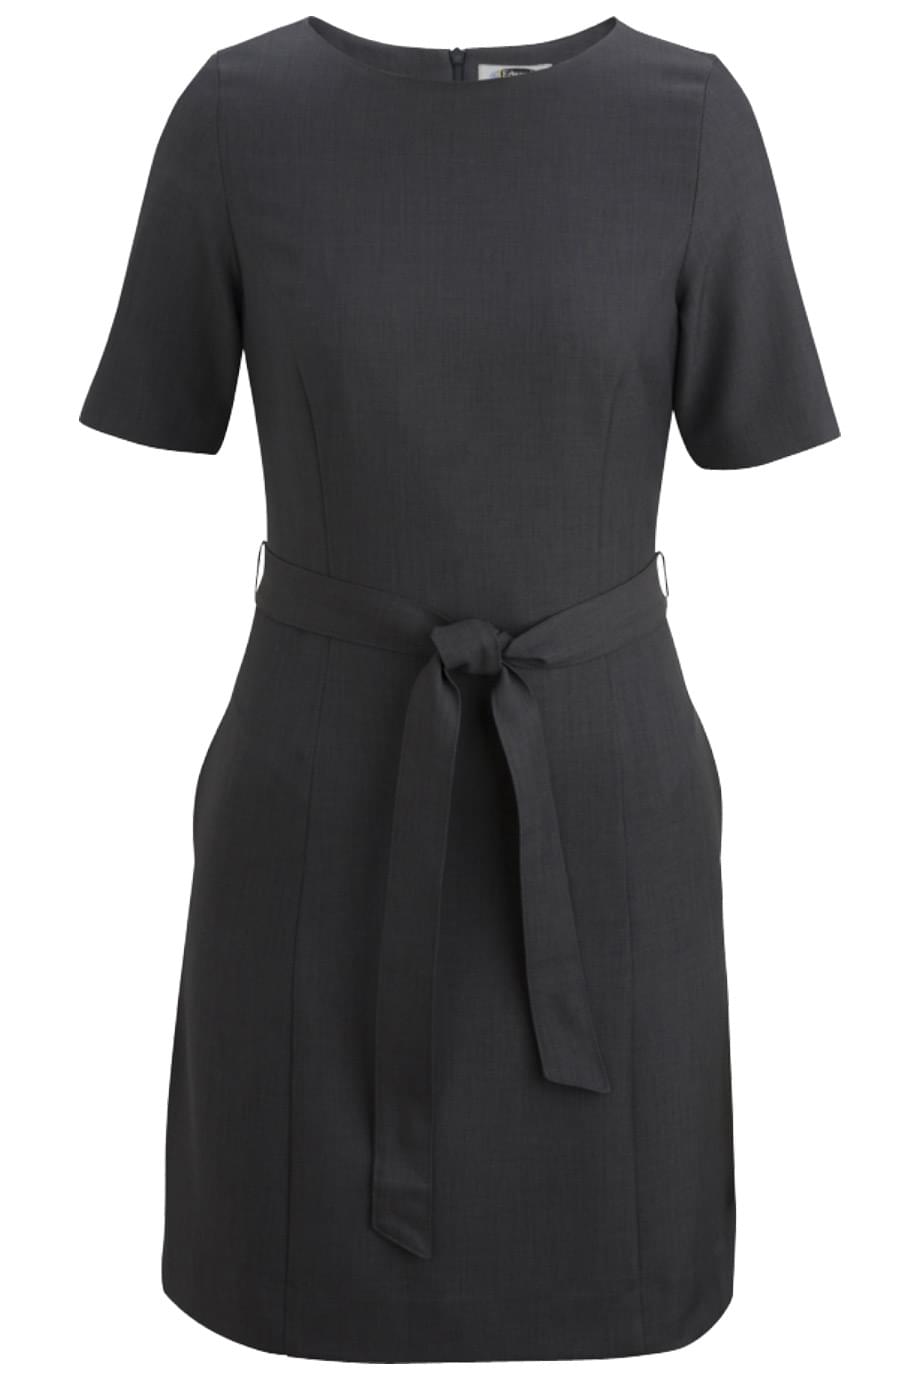 SYNERGY DRESS | Edwards Garment